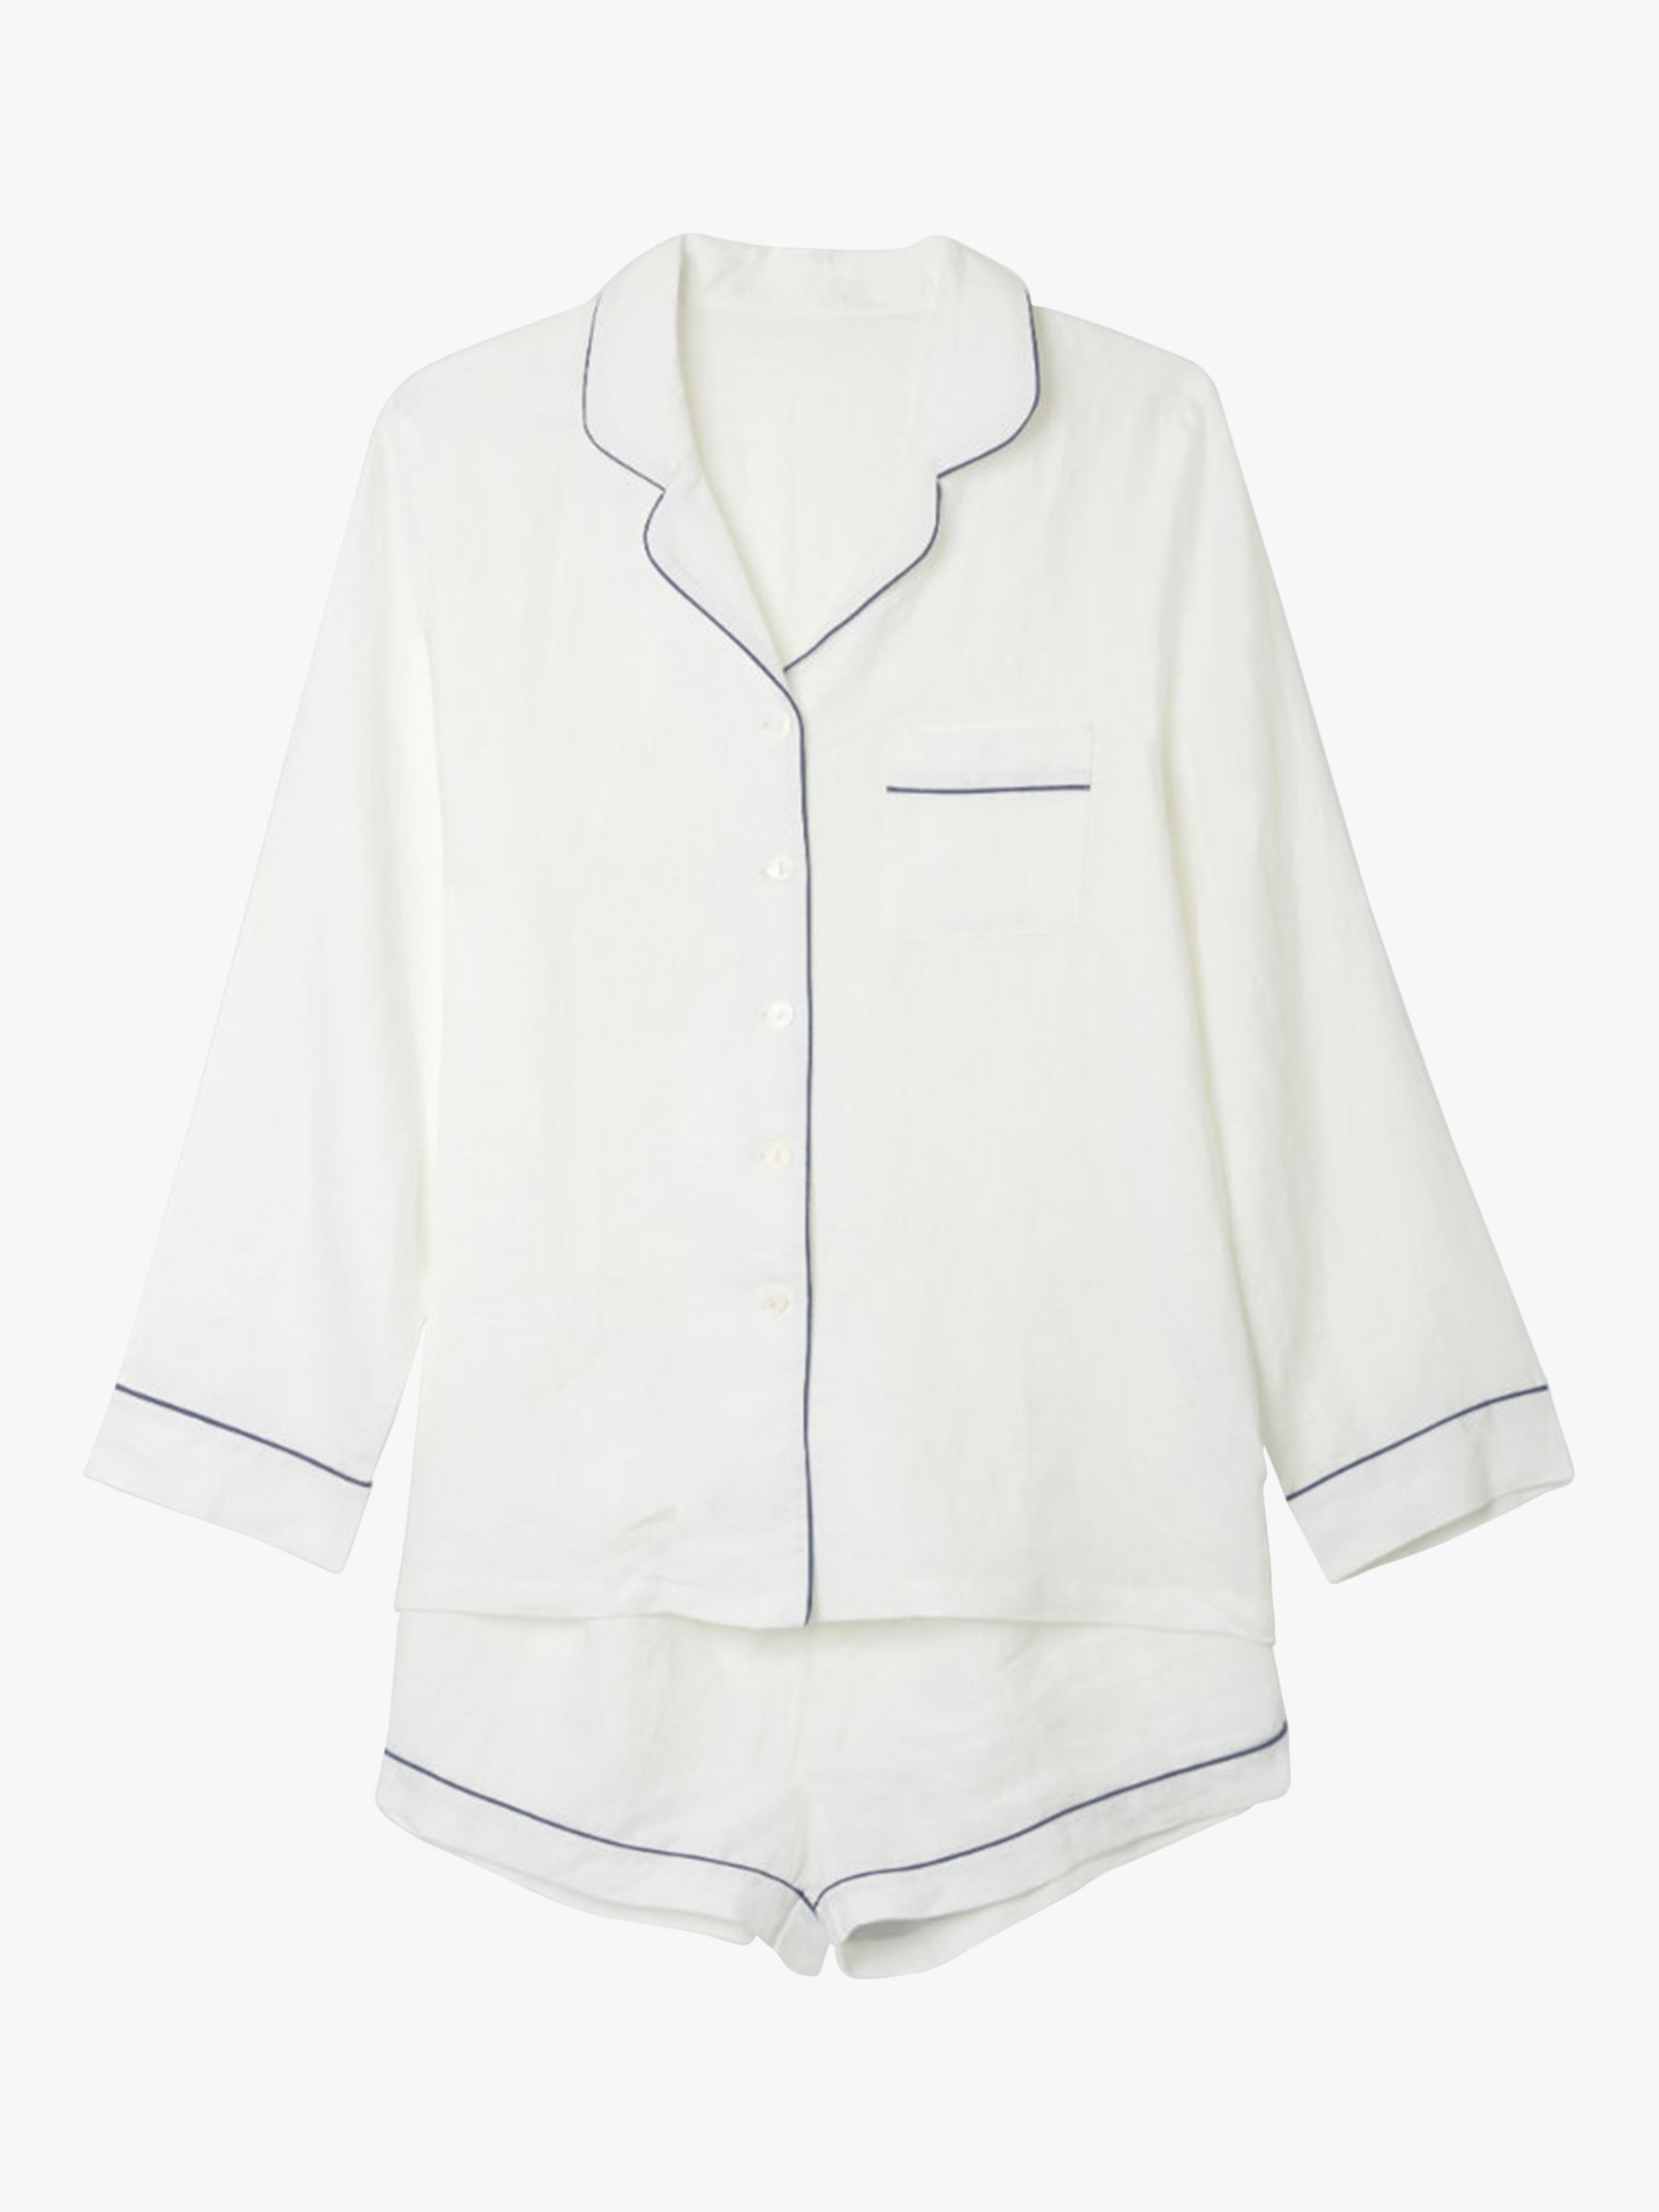 Piglet in Bed Linen Shortie Pyjama Set, White at John Lewis & Partners